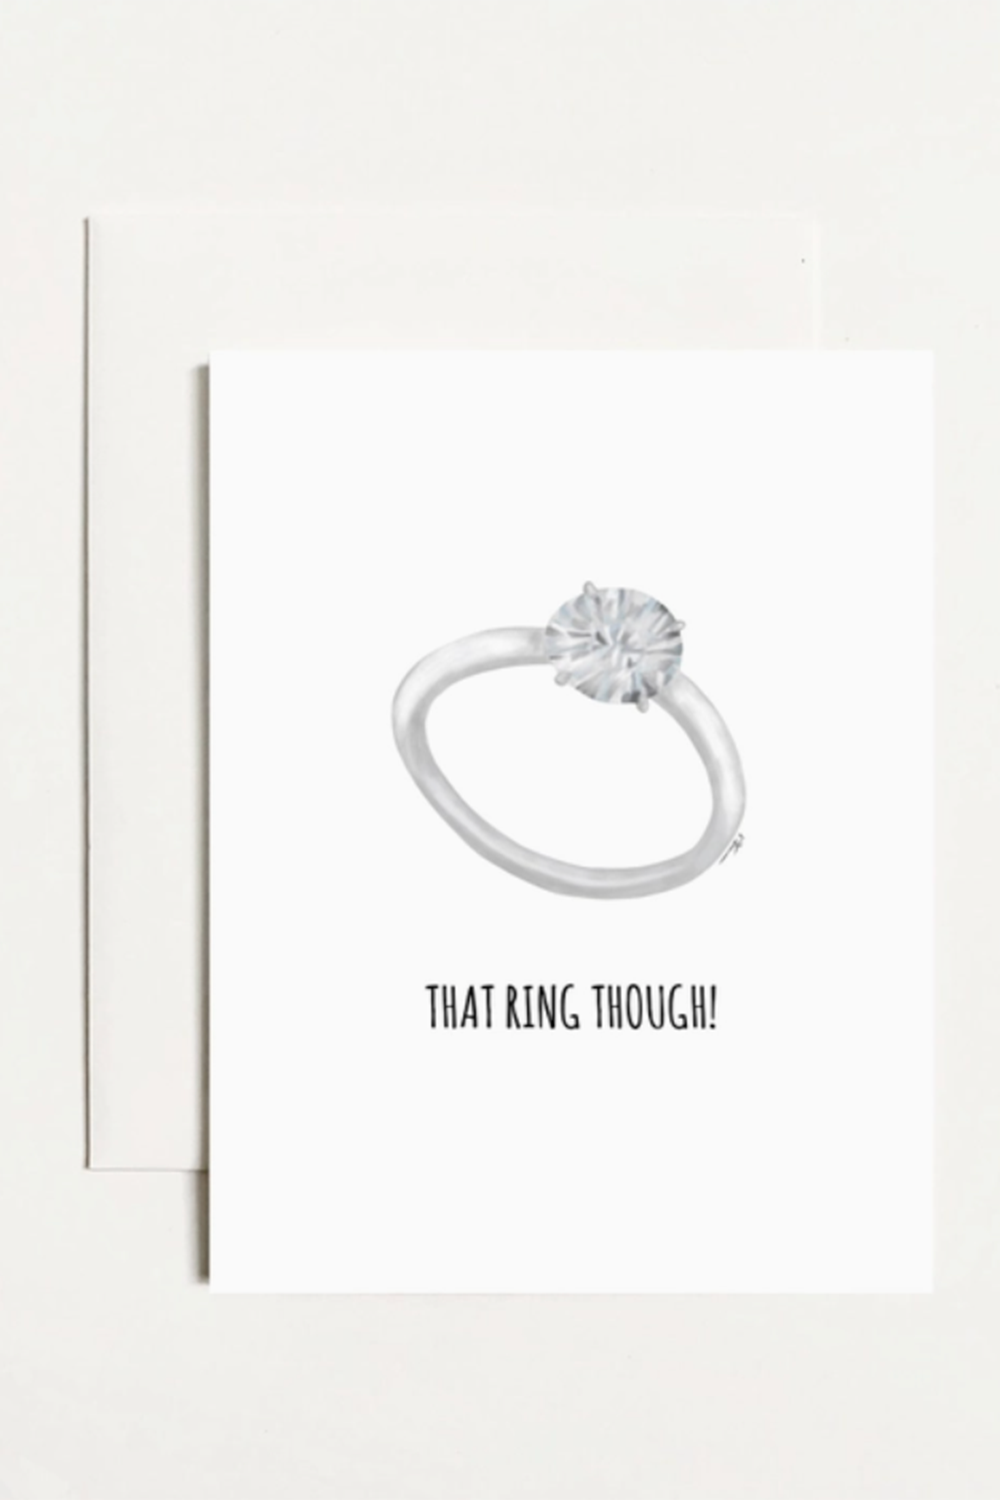 KP Wedding Greeting Card - That Ring Though